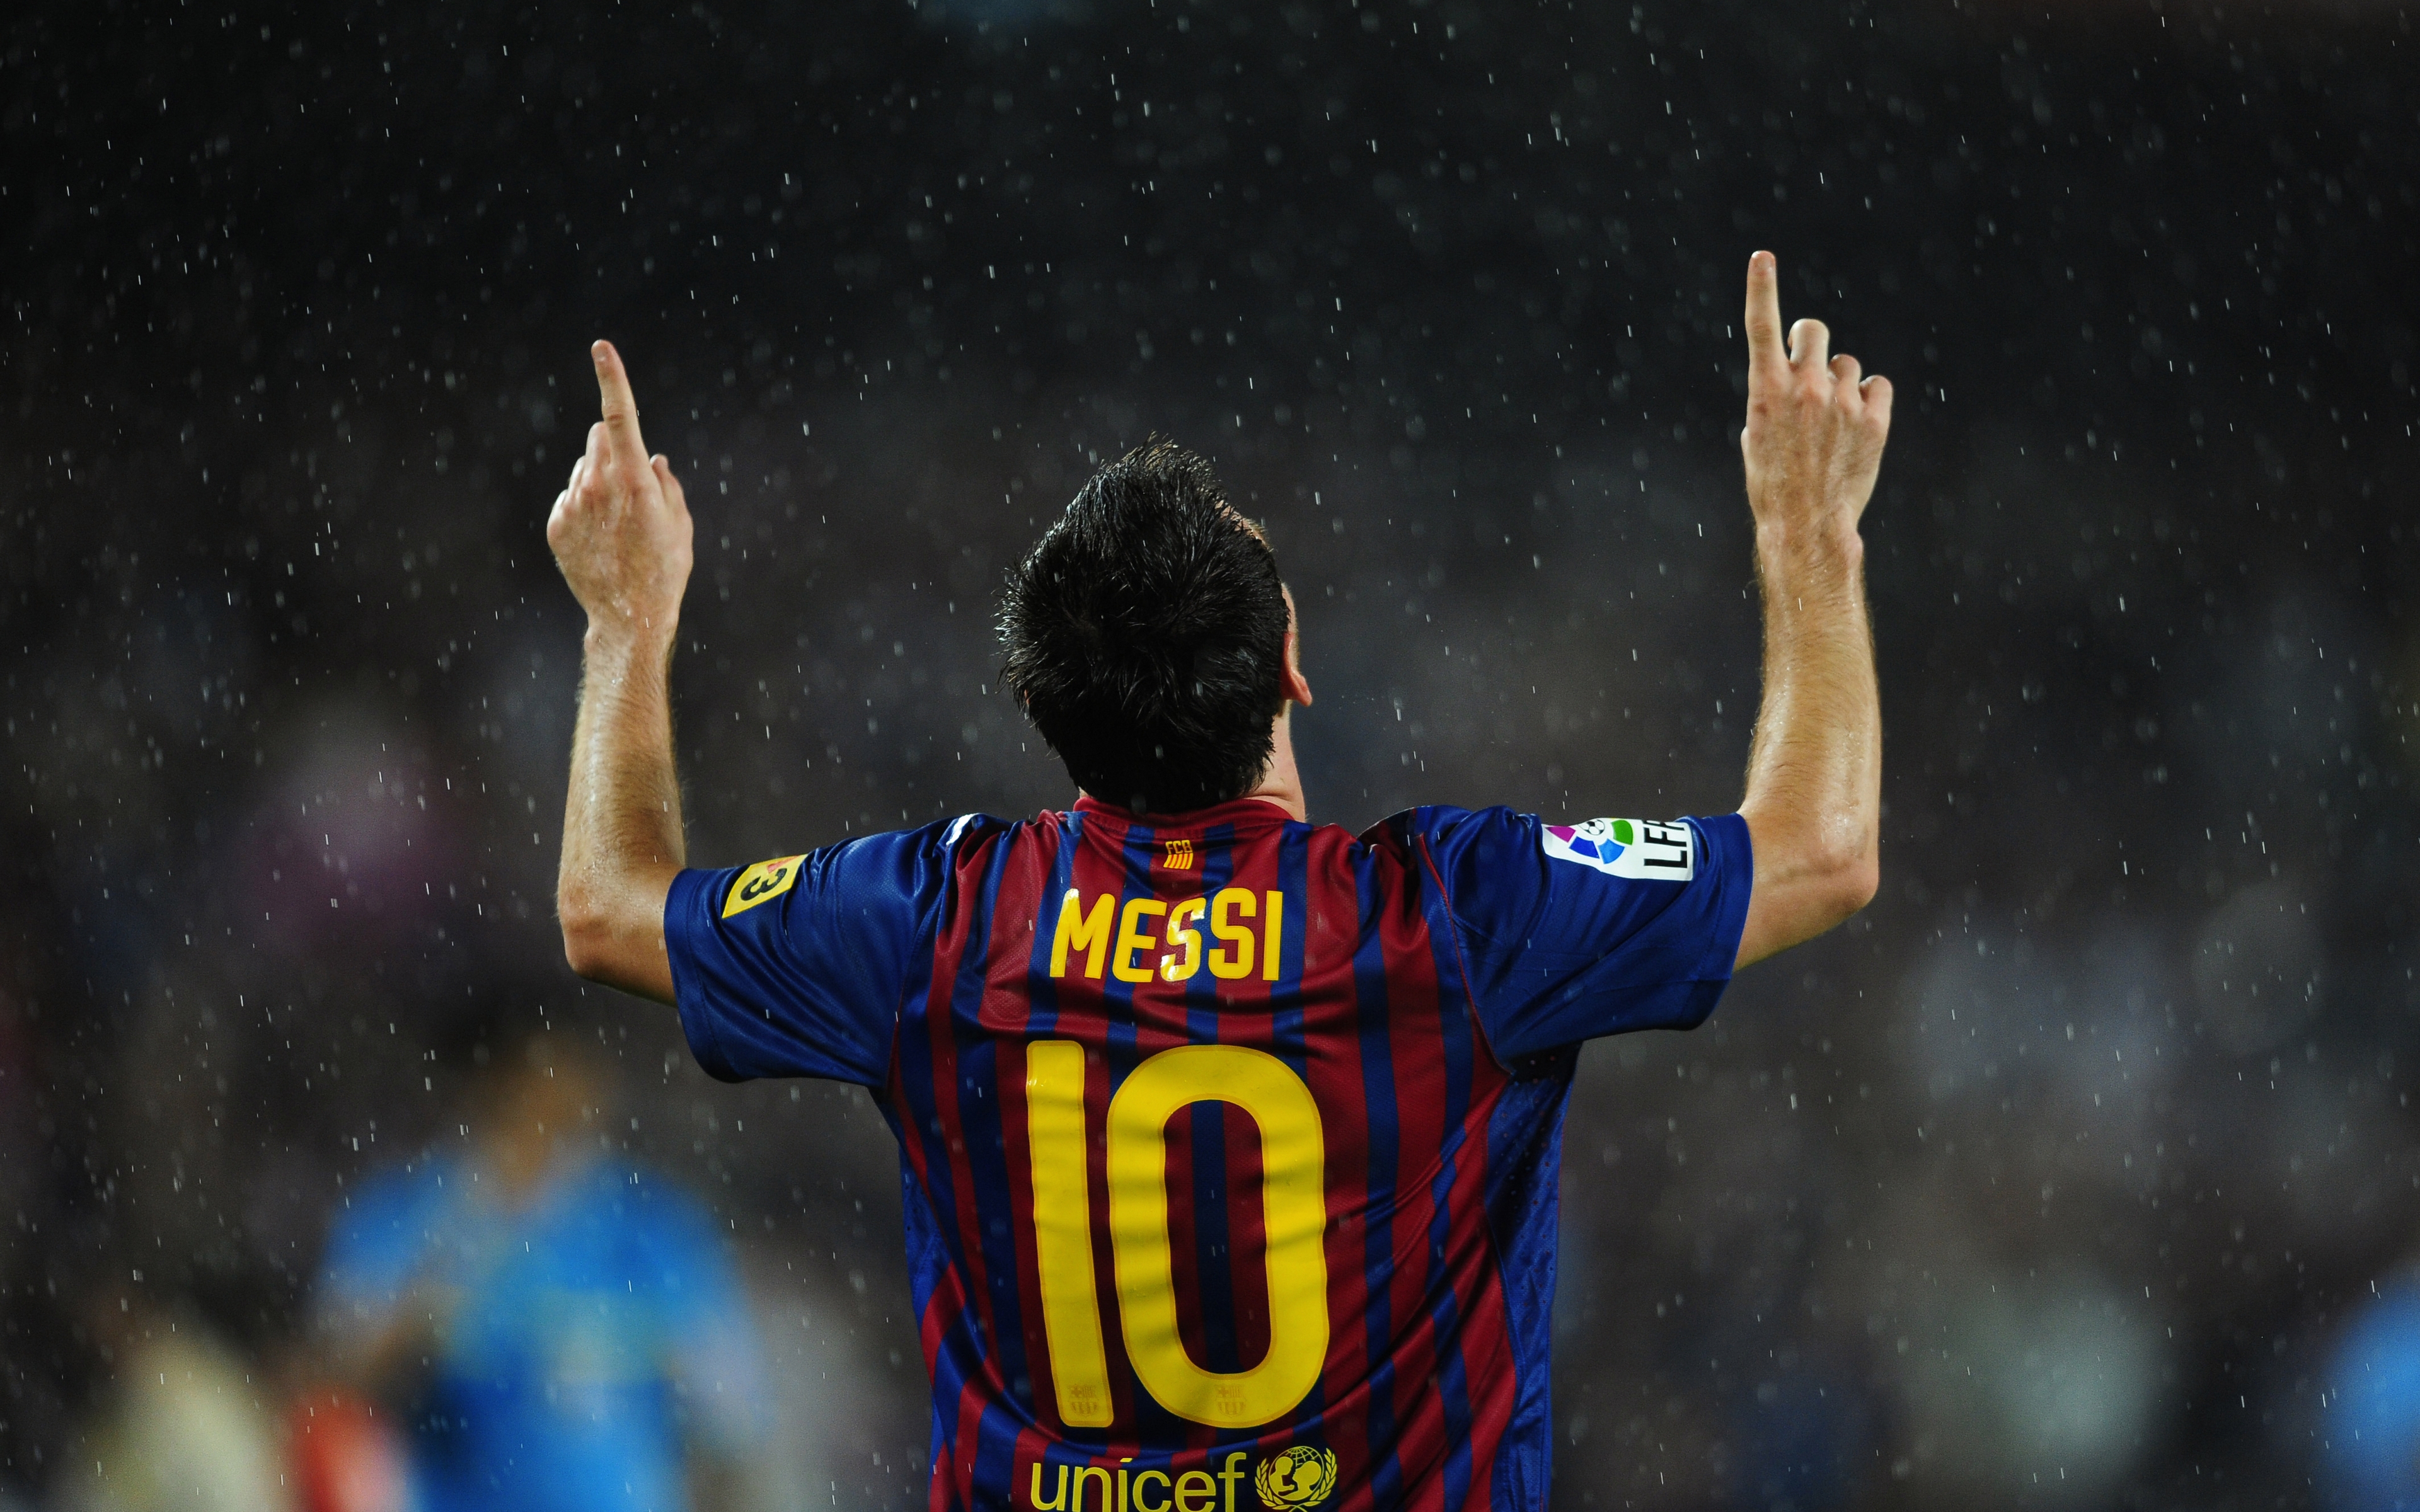 Lionel Messi in Rain for 3840 x 2400 Widescreen resolution